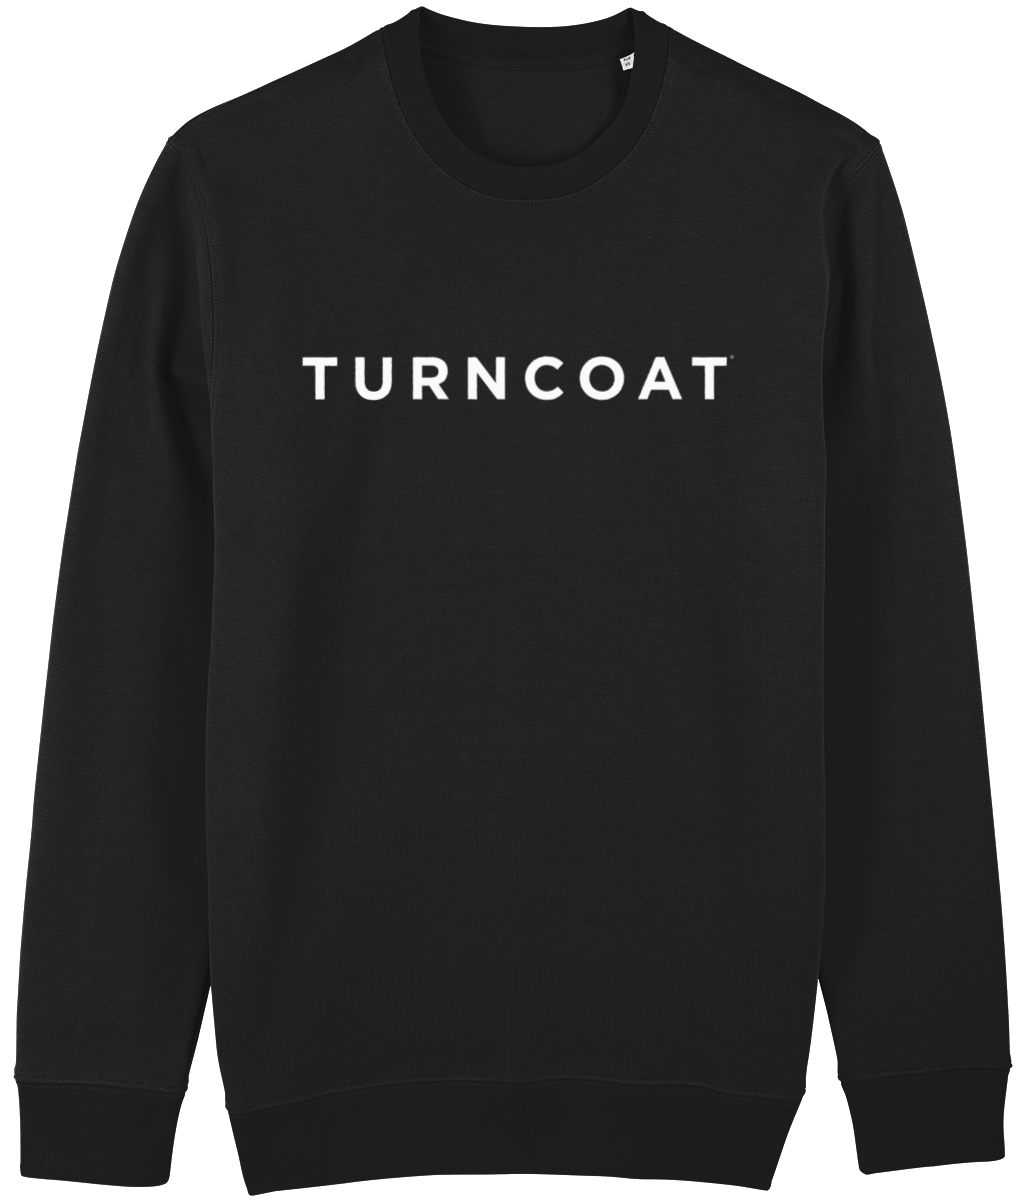 Turncoat Sweatshirt